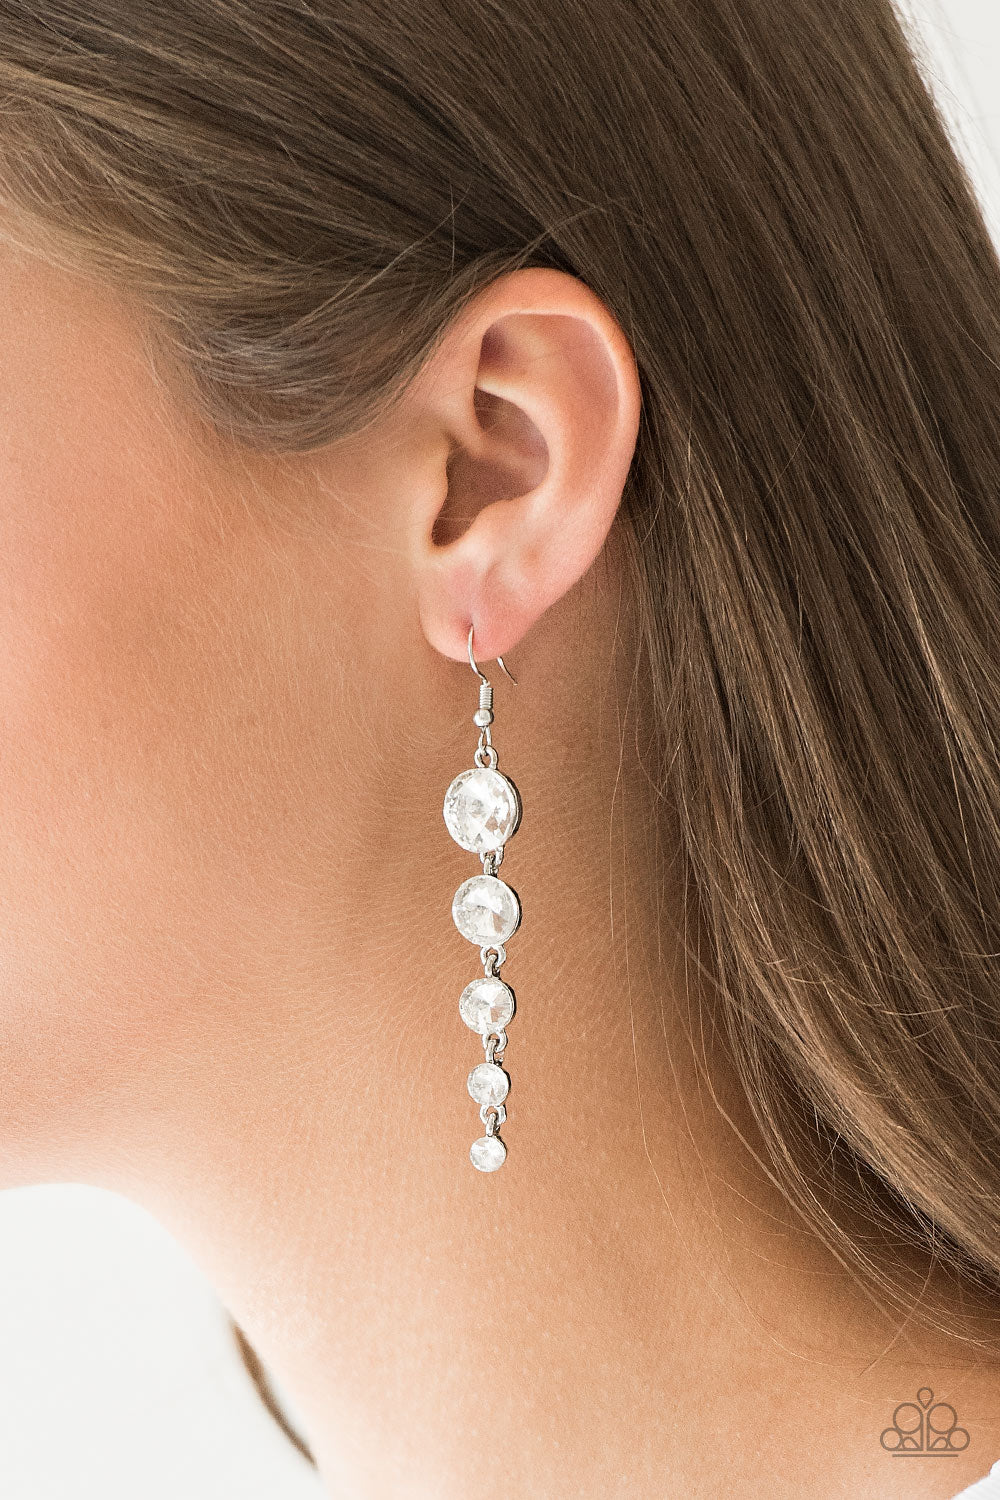 Dangling earrings with silver rhinestones